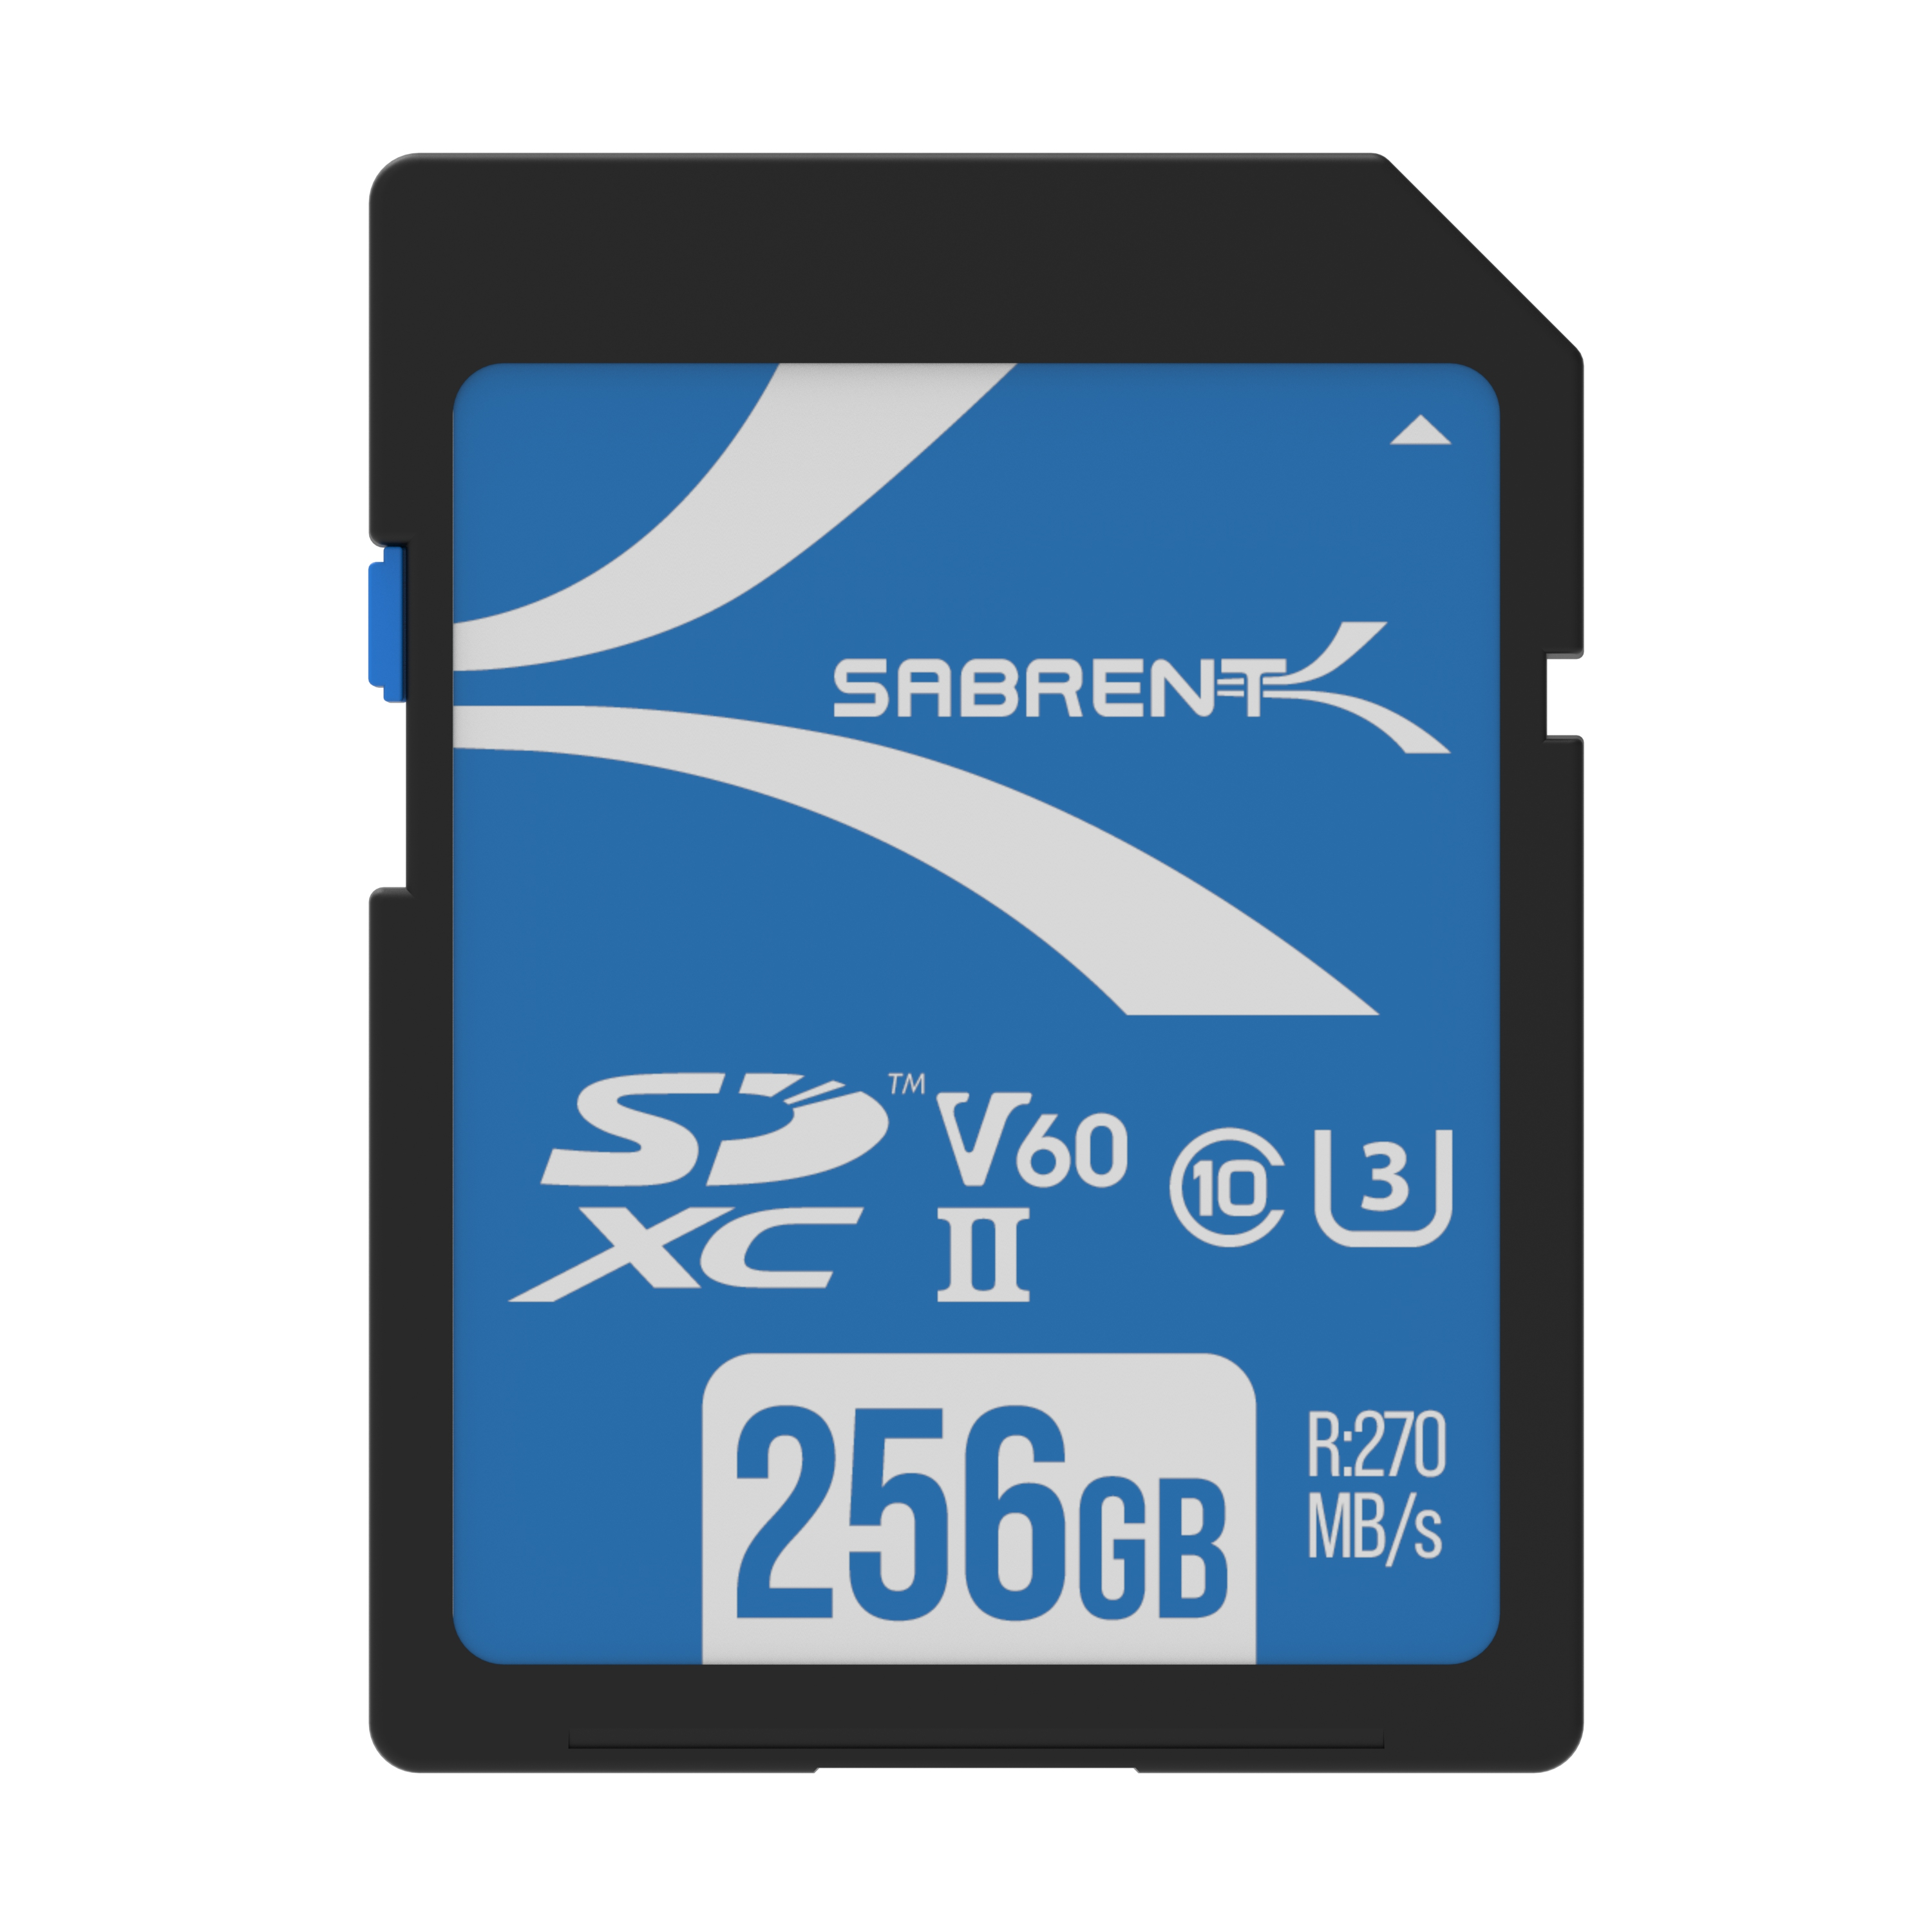 256GB V60 SDXC GB, 256 UHS-II, 270 SD MB/s Karte, SD SABRENT